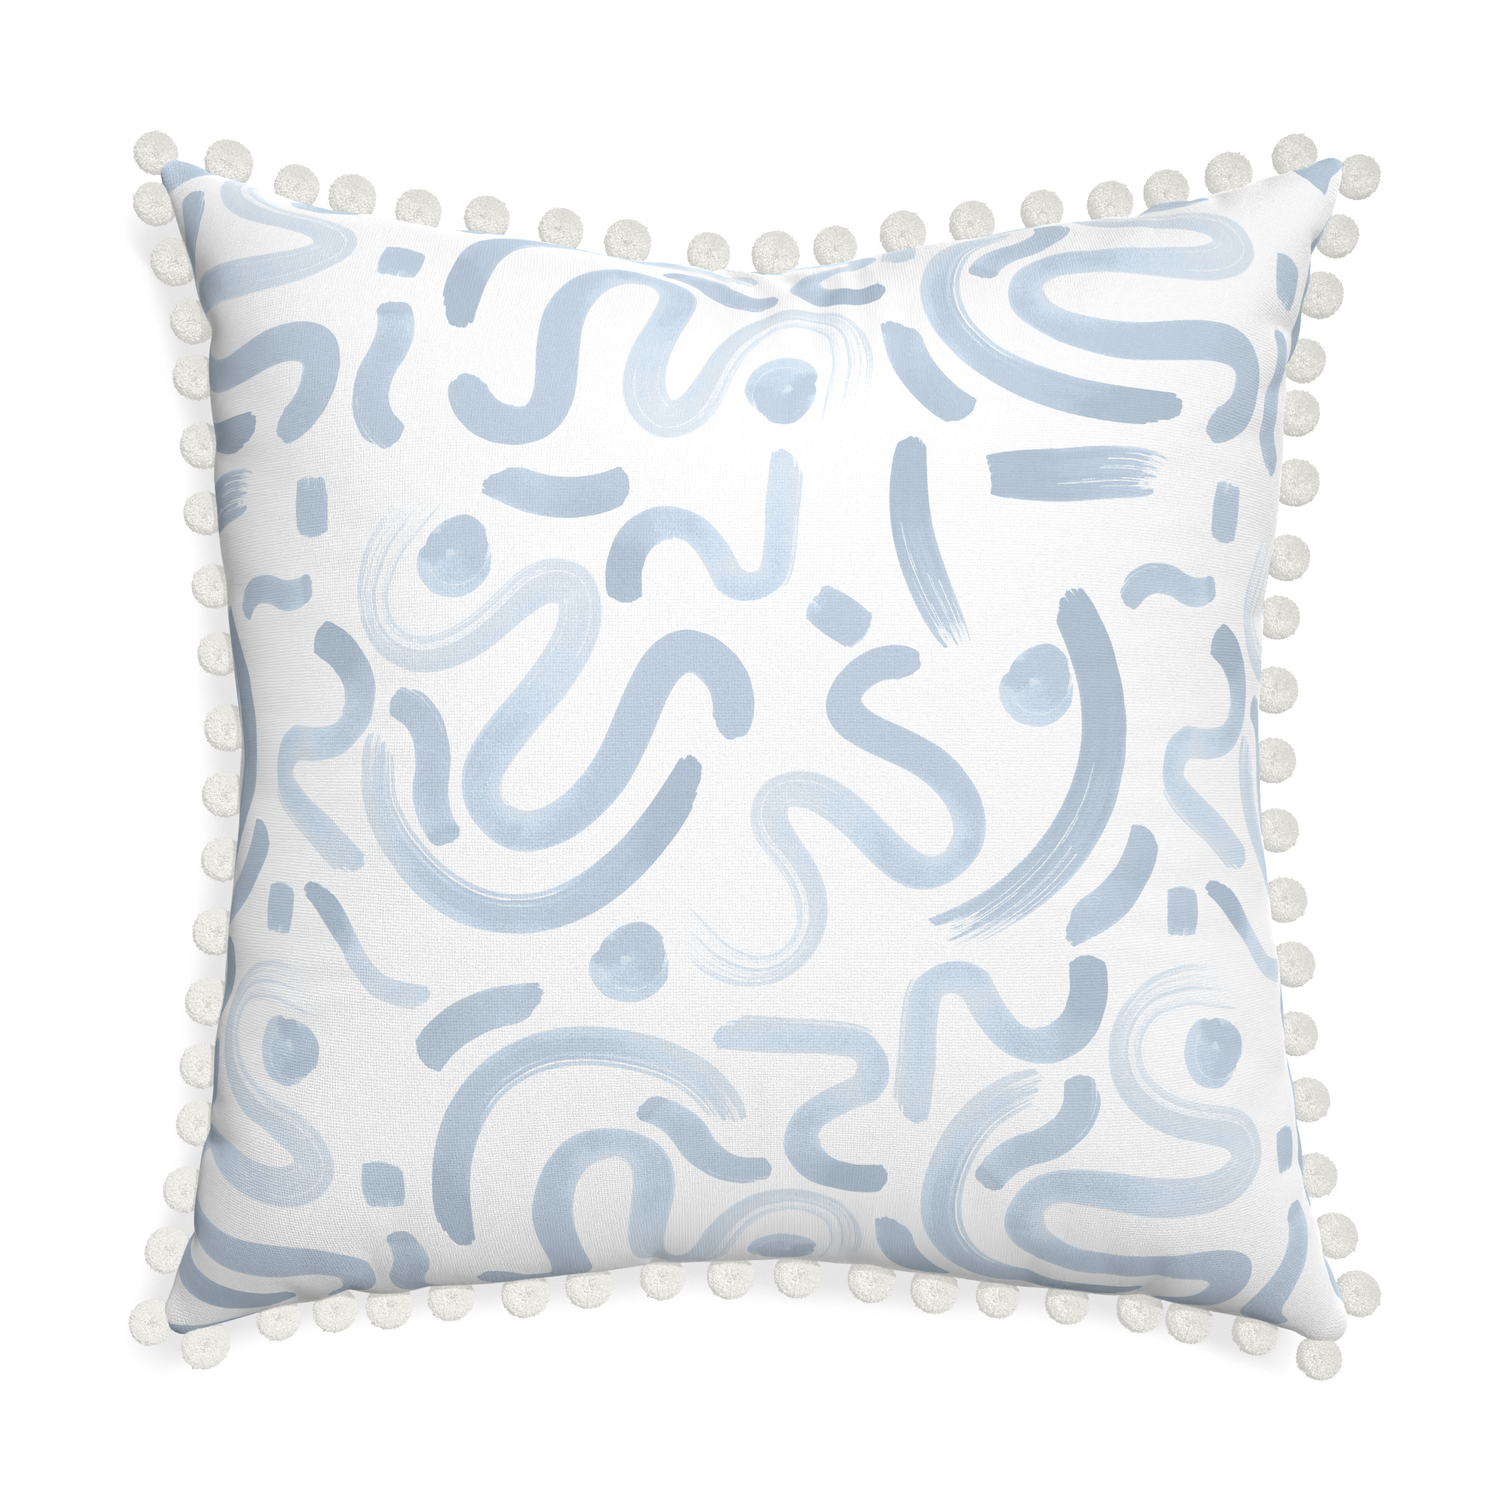 Euro-sham hockney sky custom pillow with snow pom pom on white background